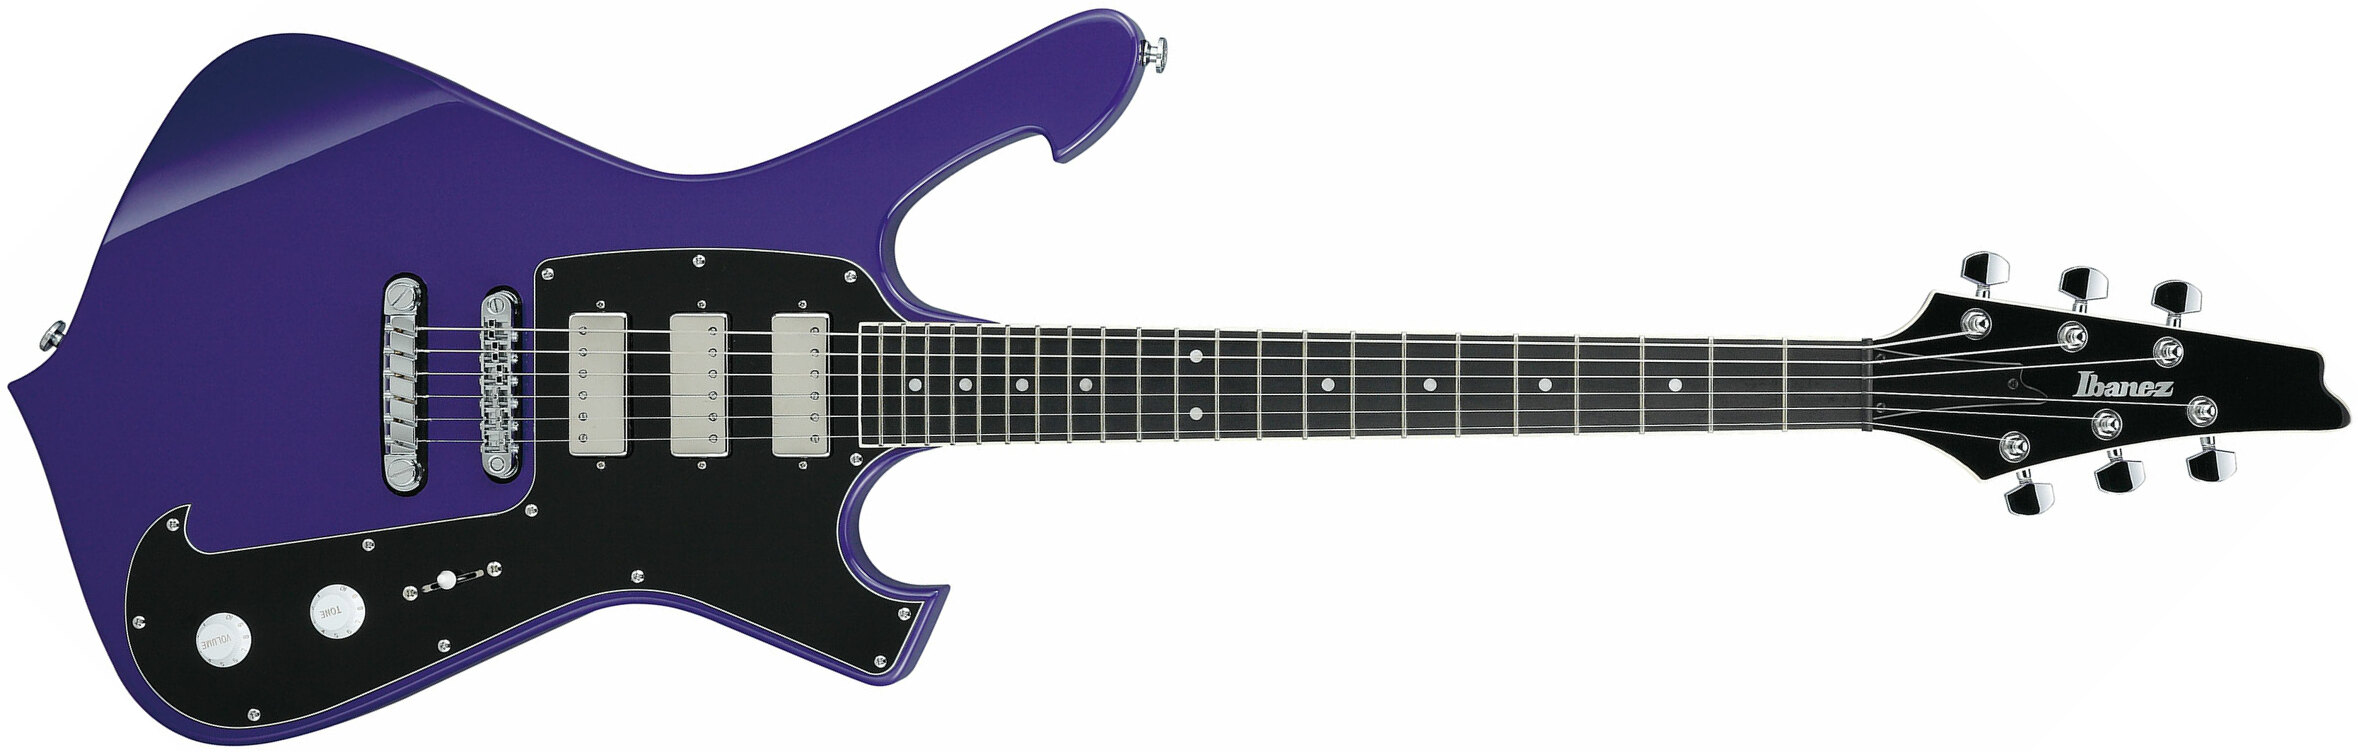 Ibanez Paul Gilbert Frm300 Pr Signature Hhh Ht Eb +housse - Purple - Signature electric guitar - Main picture